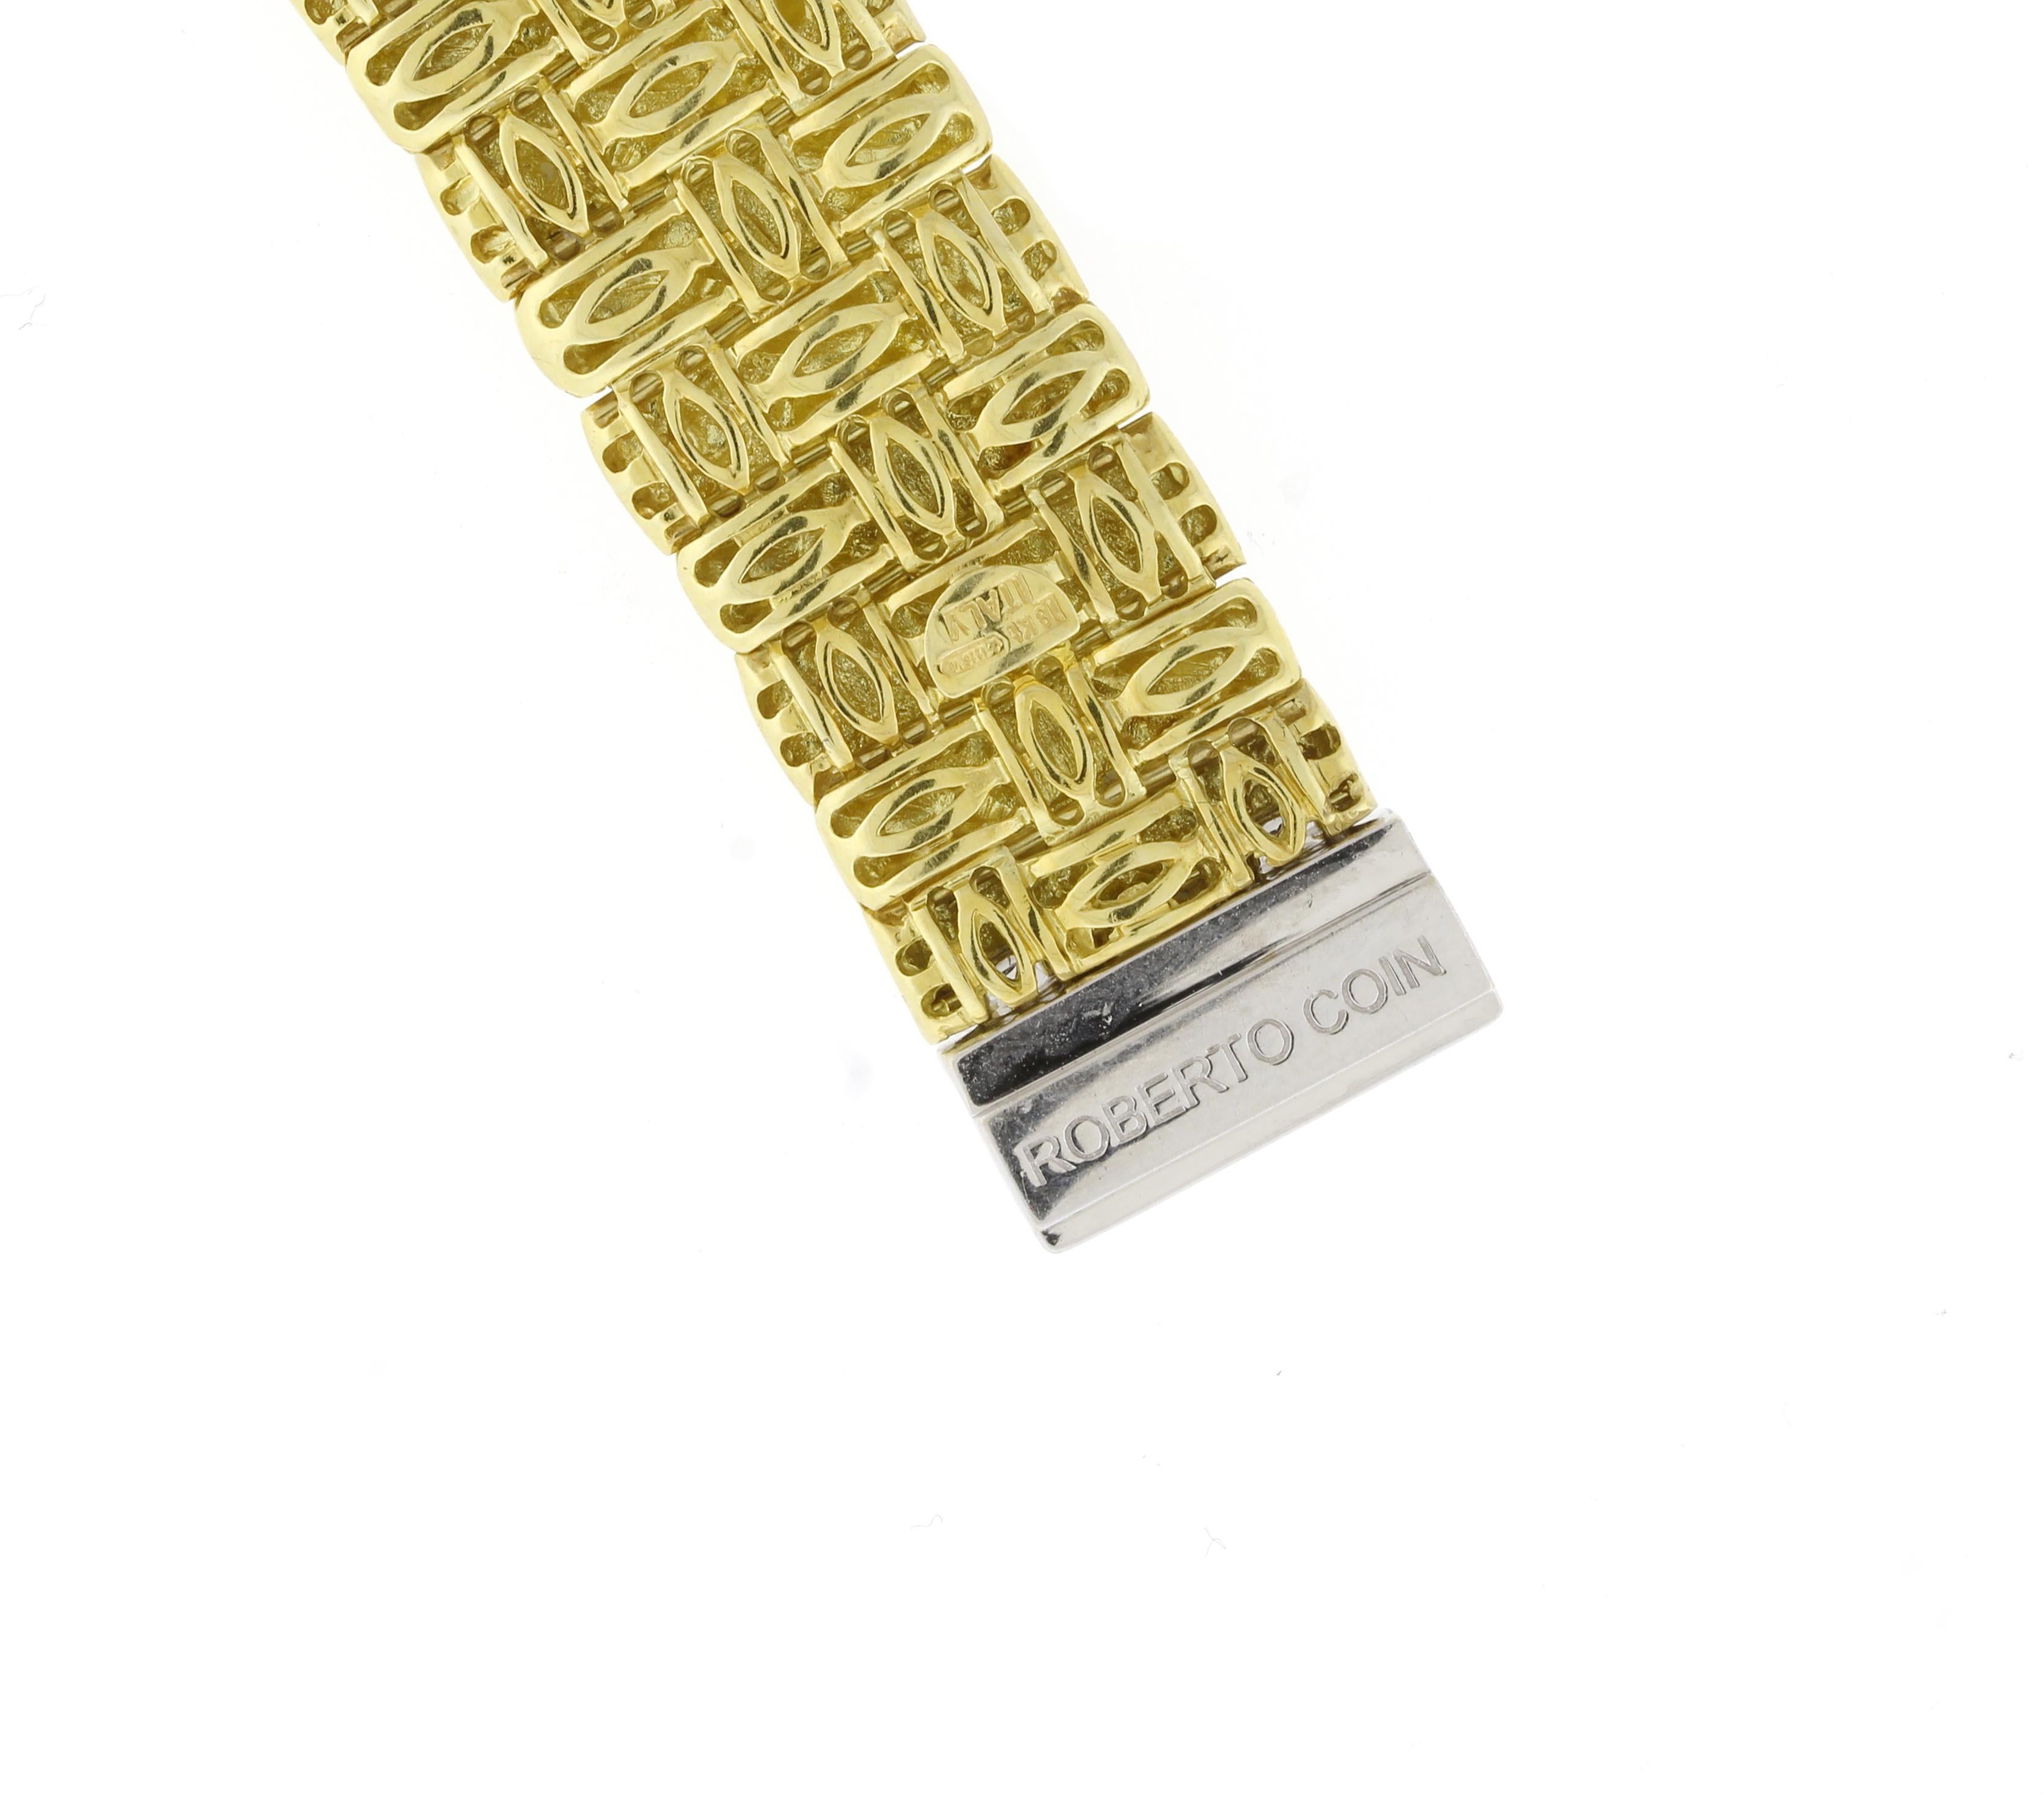 senco gold men's bracelet collection with price